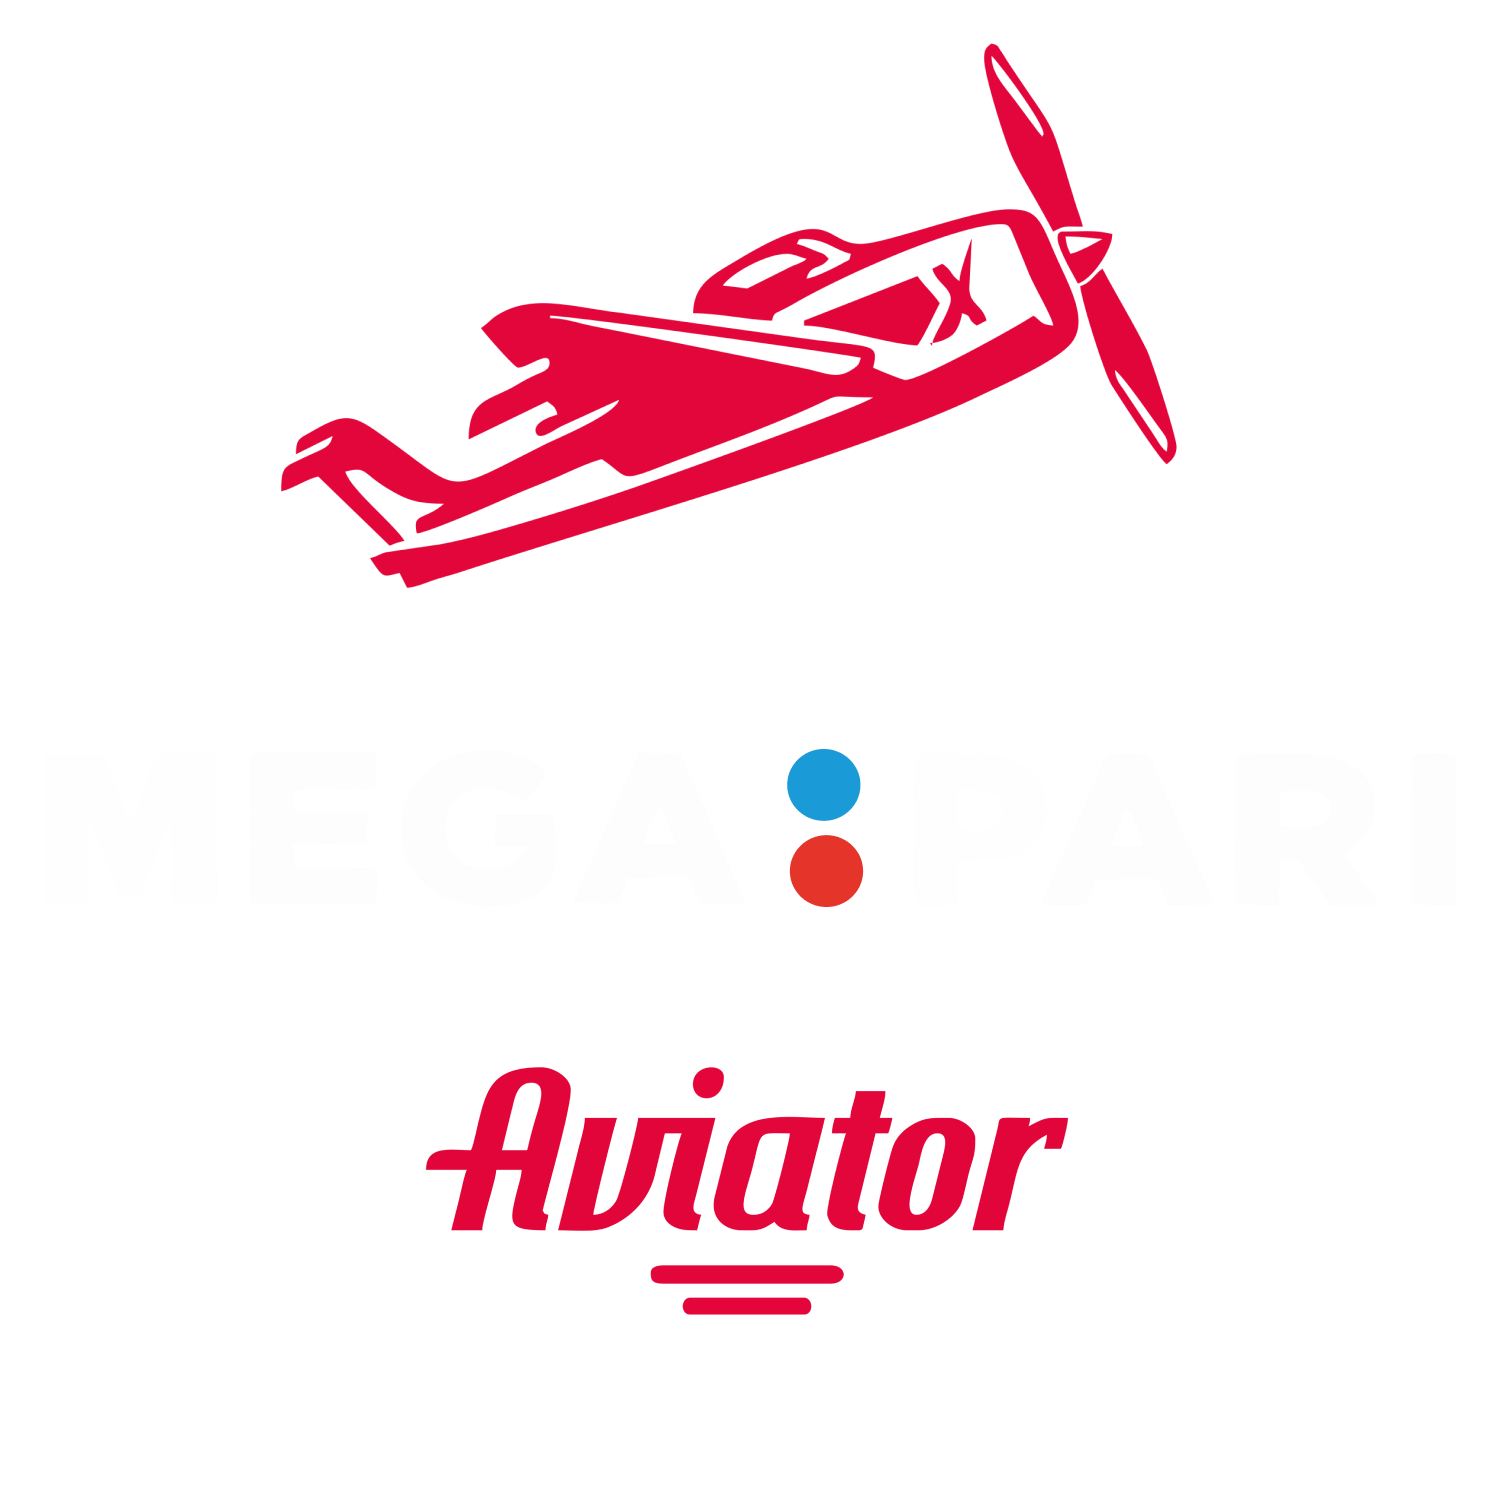 To play Aviator, choose the Megapari platform.